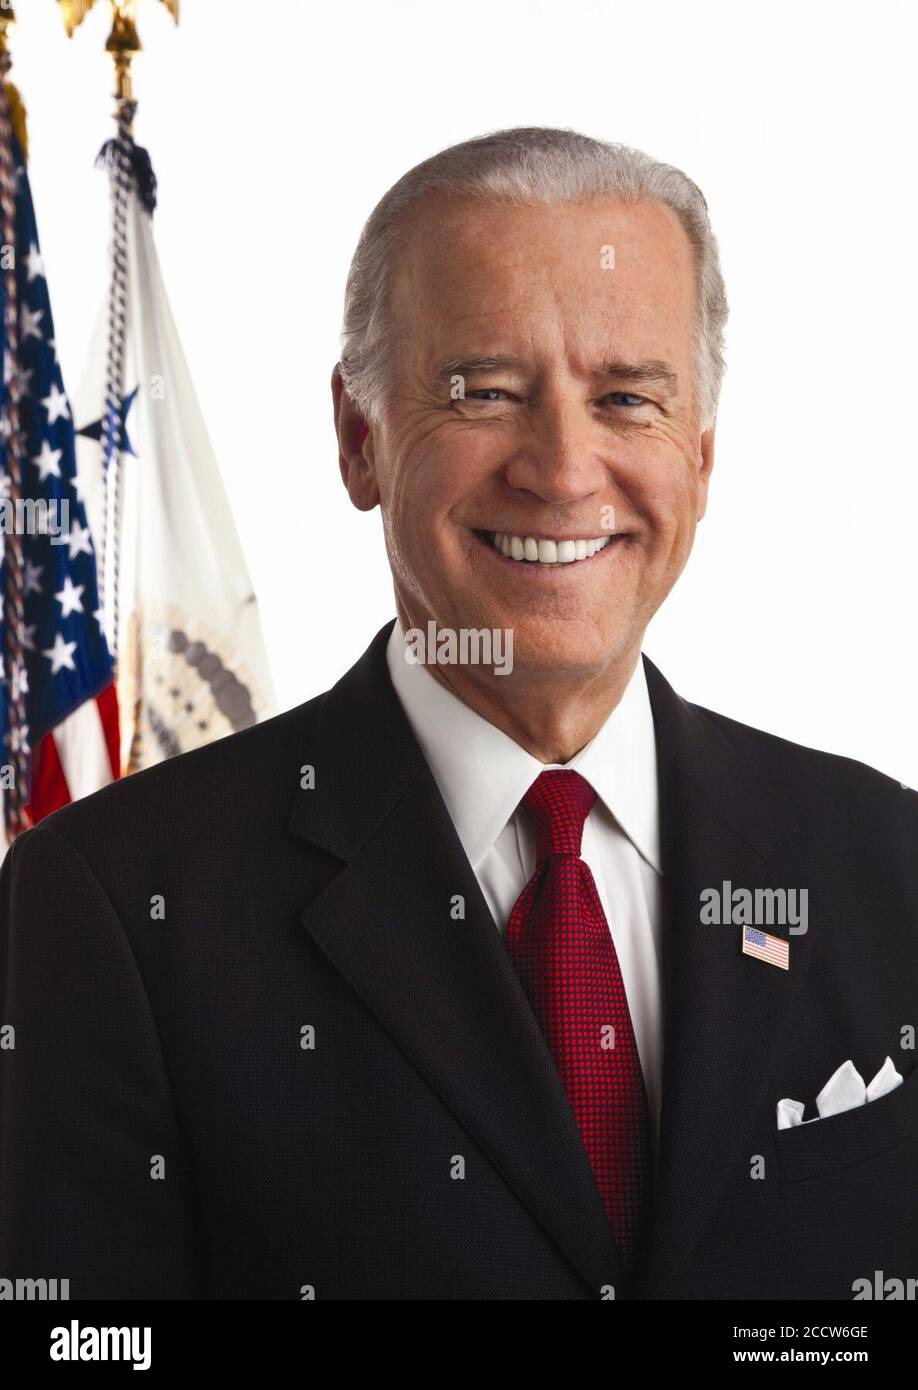 Joe Biden official portrait crop2. Stock Photo